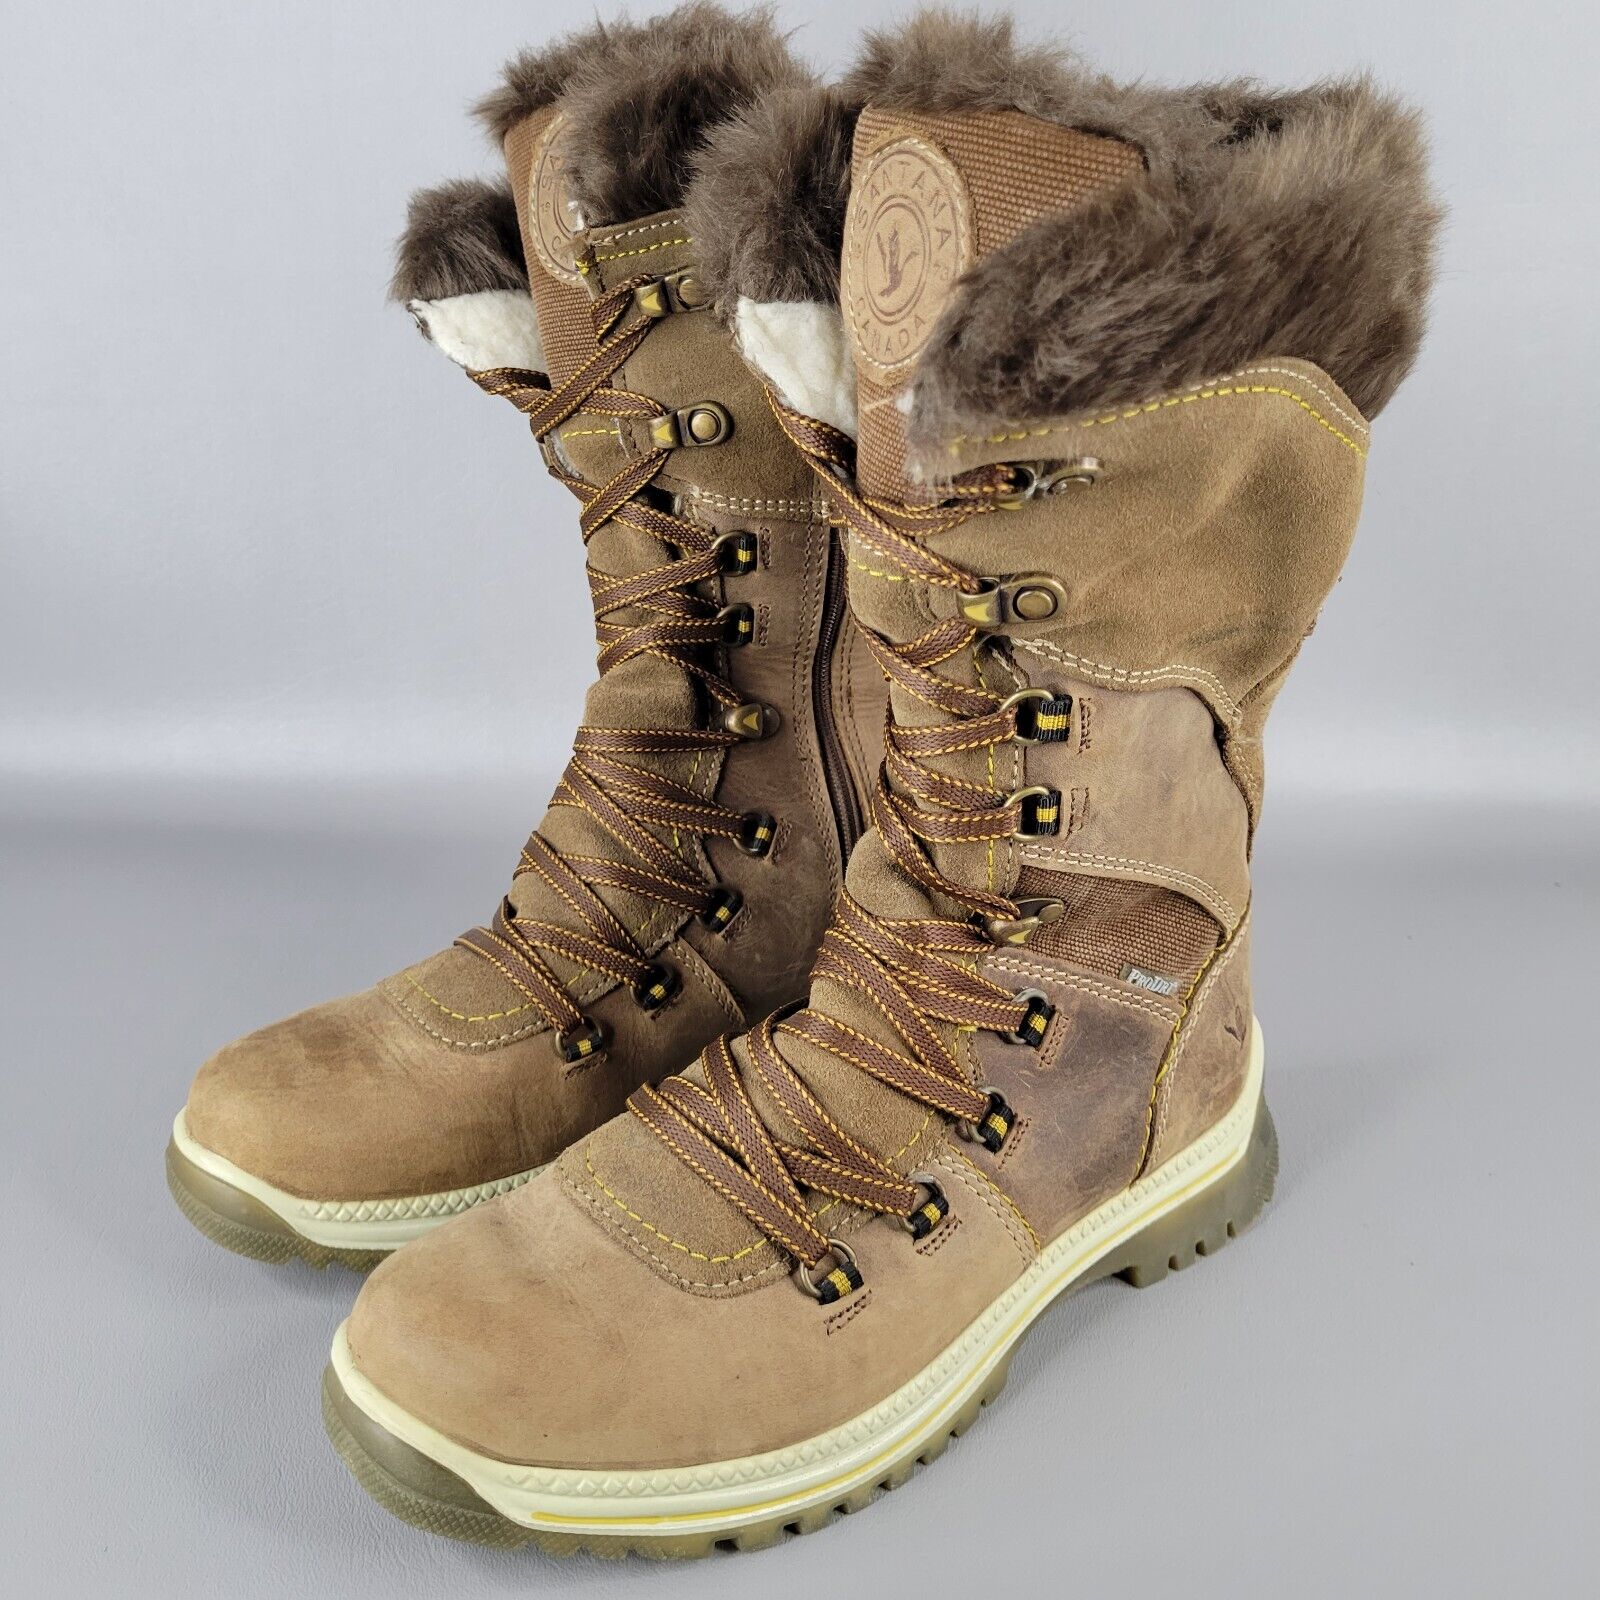 Santana Canada Brown Morella waterproof Winter leather Boot Women’s size 7 US 